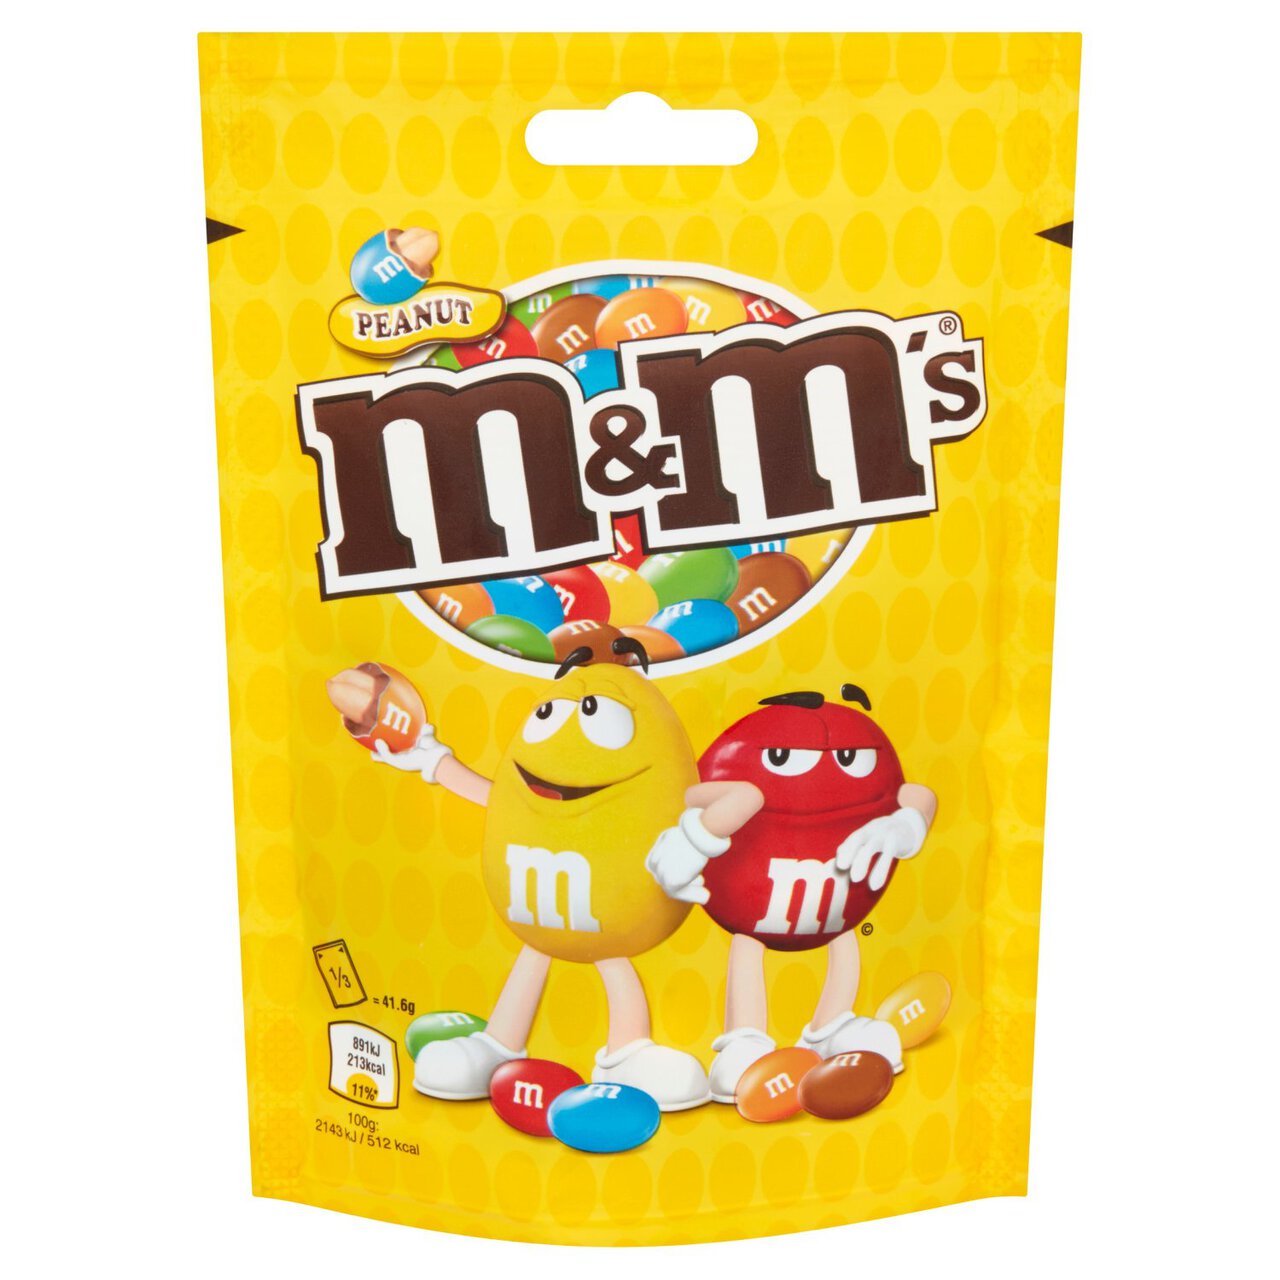 M&M's Crunchy Peanut Pieces Milk Chocolate Bag 125g